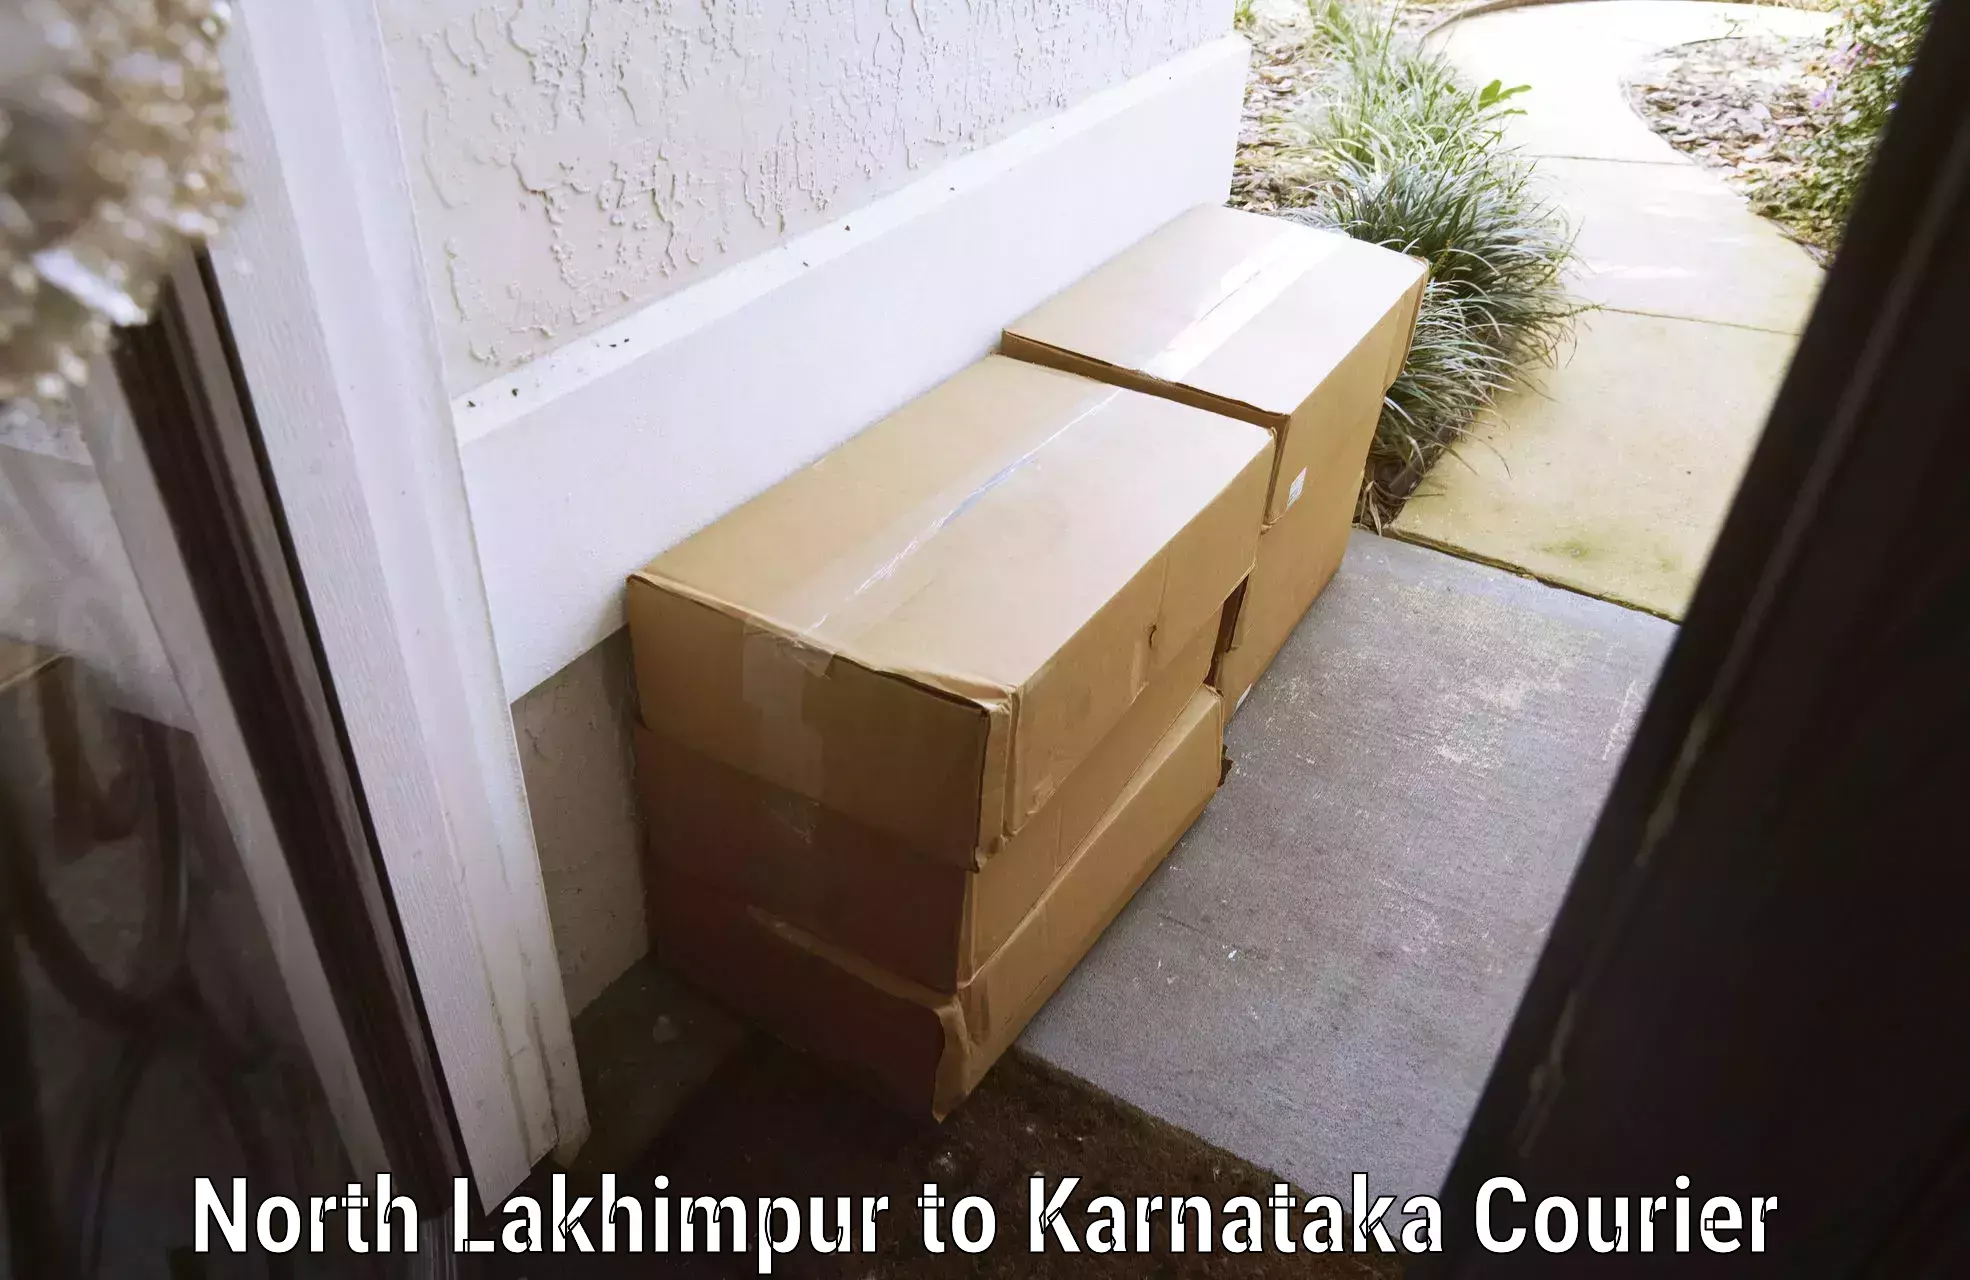 Holiday season luggage delivery in North Lakhimpur to Karnataka